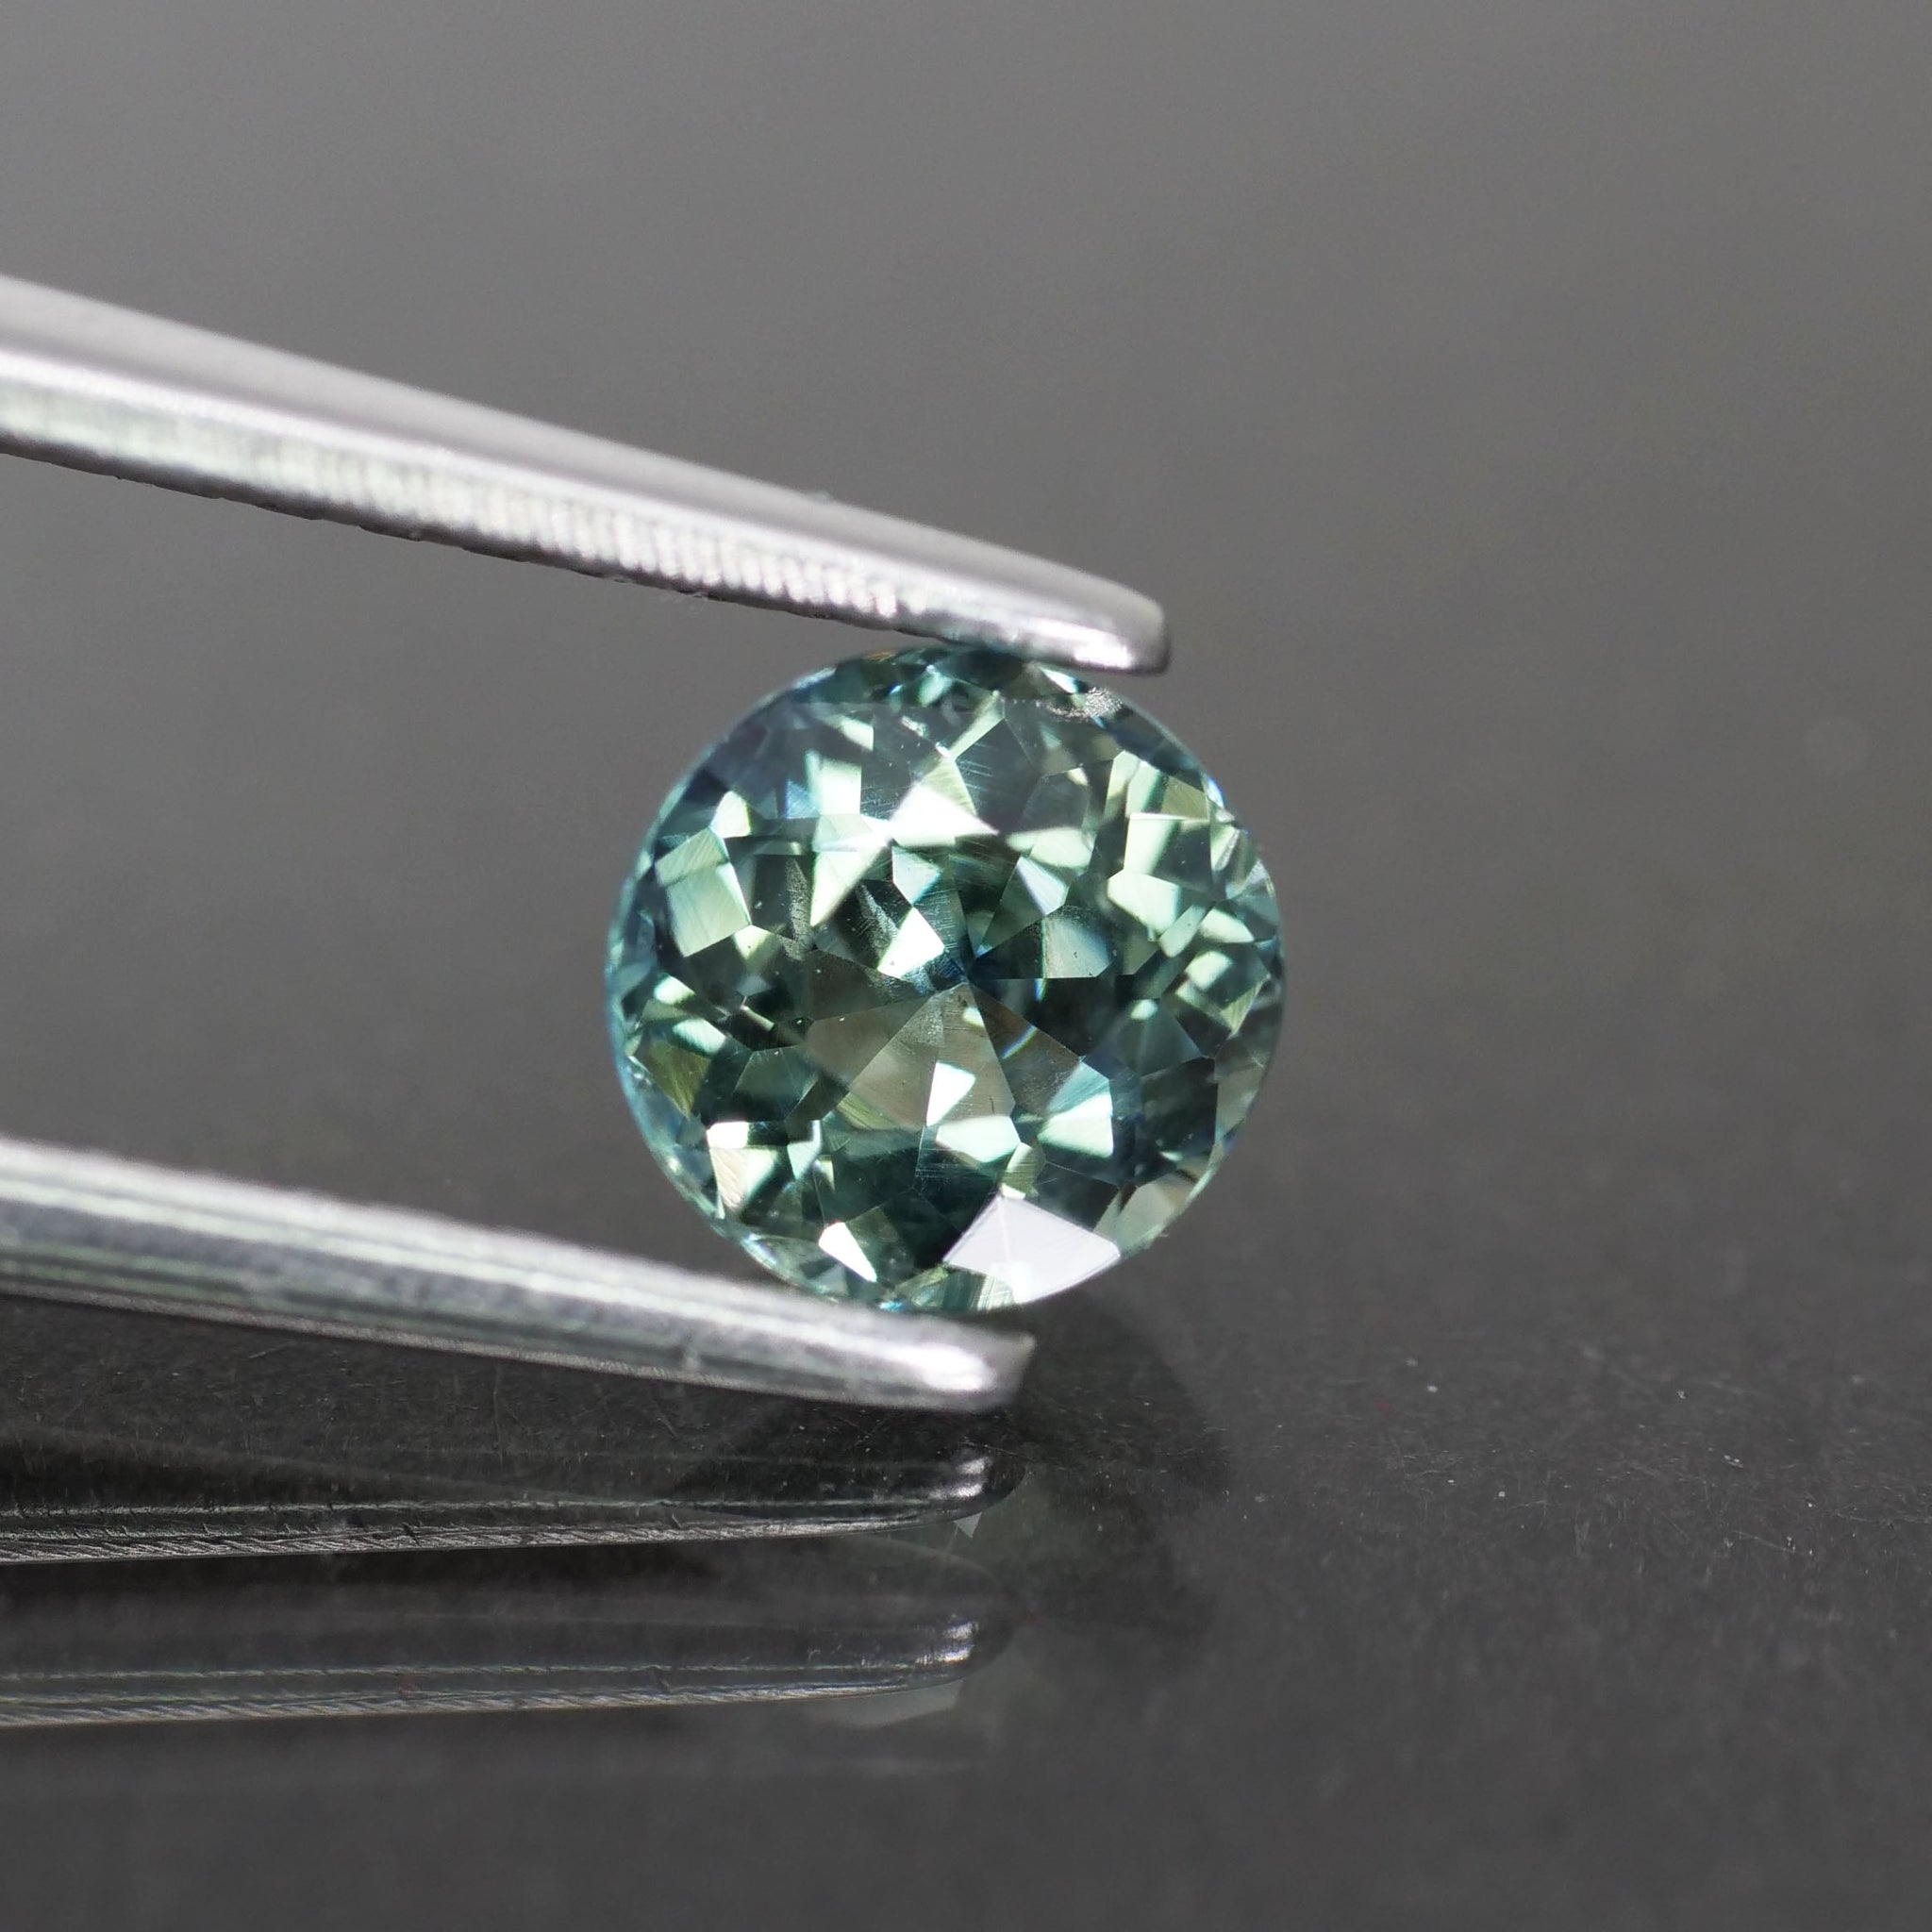 Sapphire Teal | natural, light greenish blue, round cut 5 mm, 0.6ct - Eden Garden Jewelry™